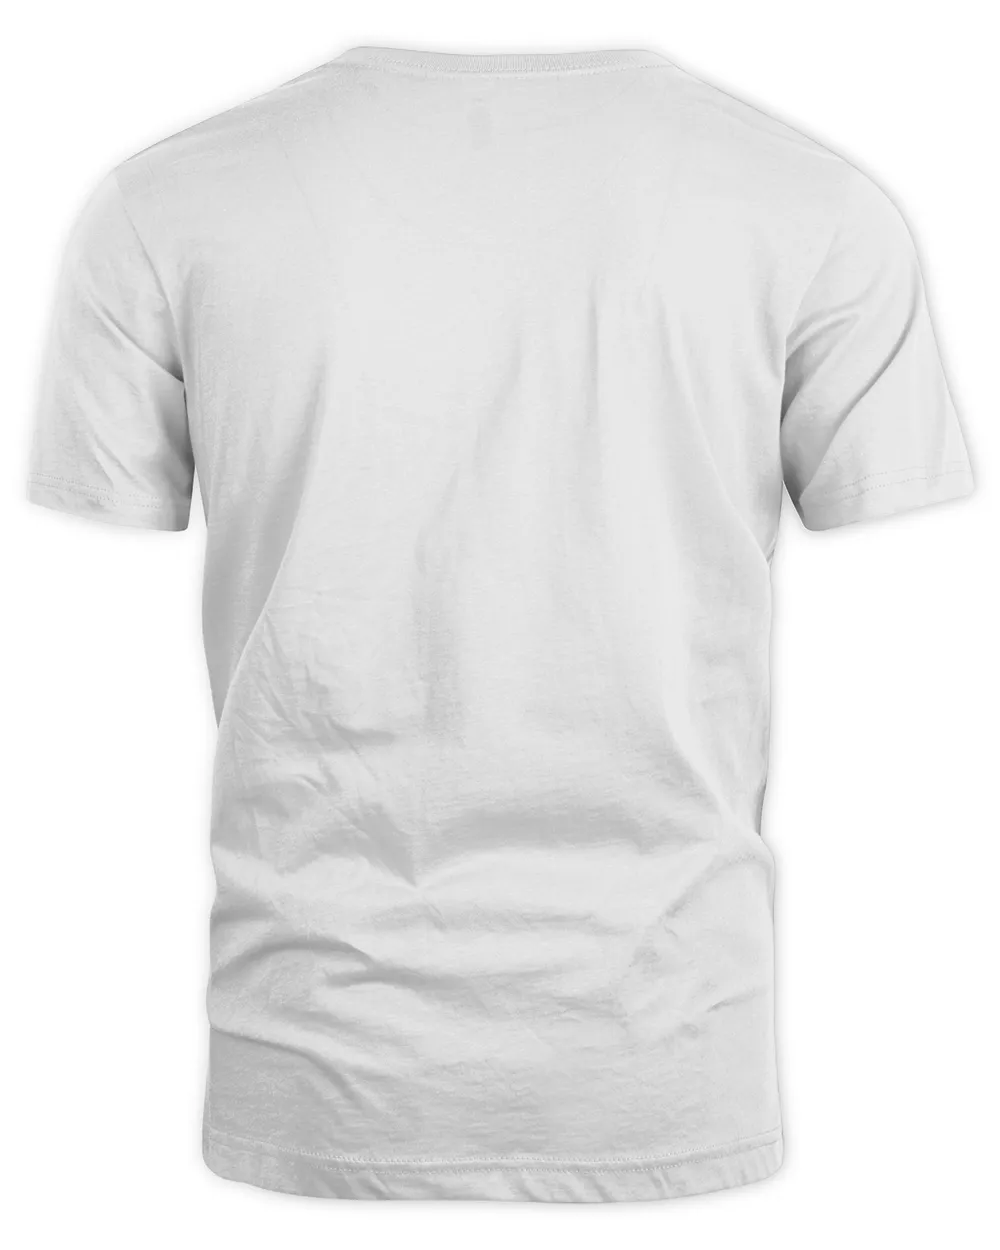 Viking T Shirt For men - Heathen Nation